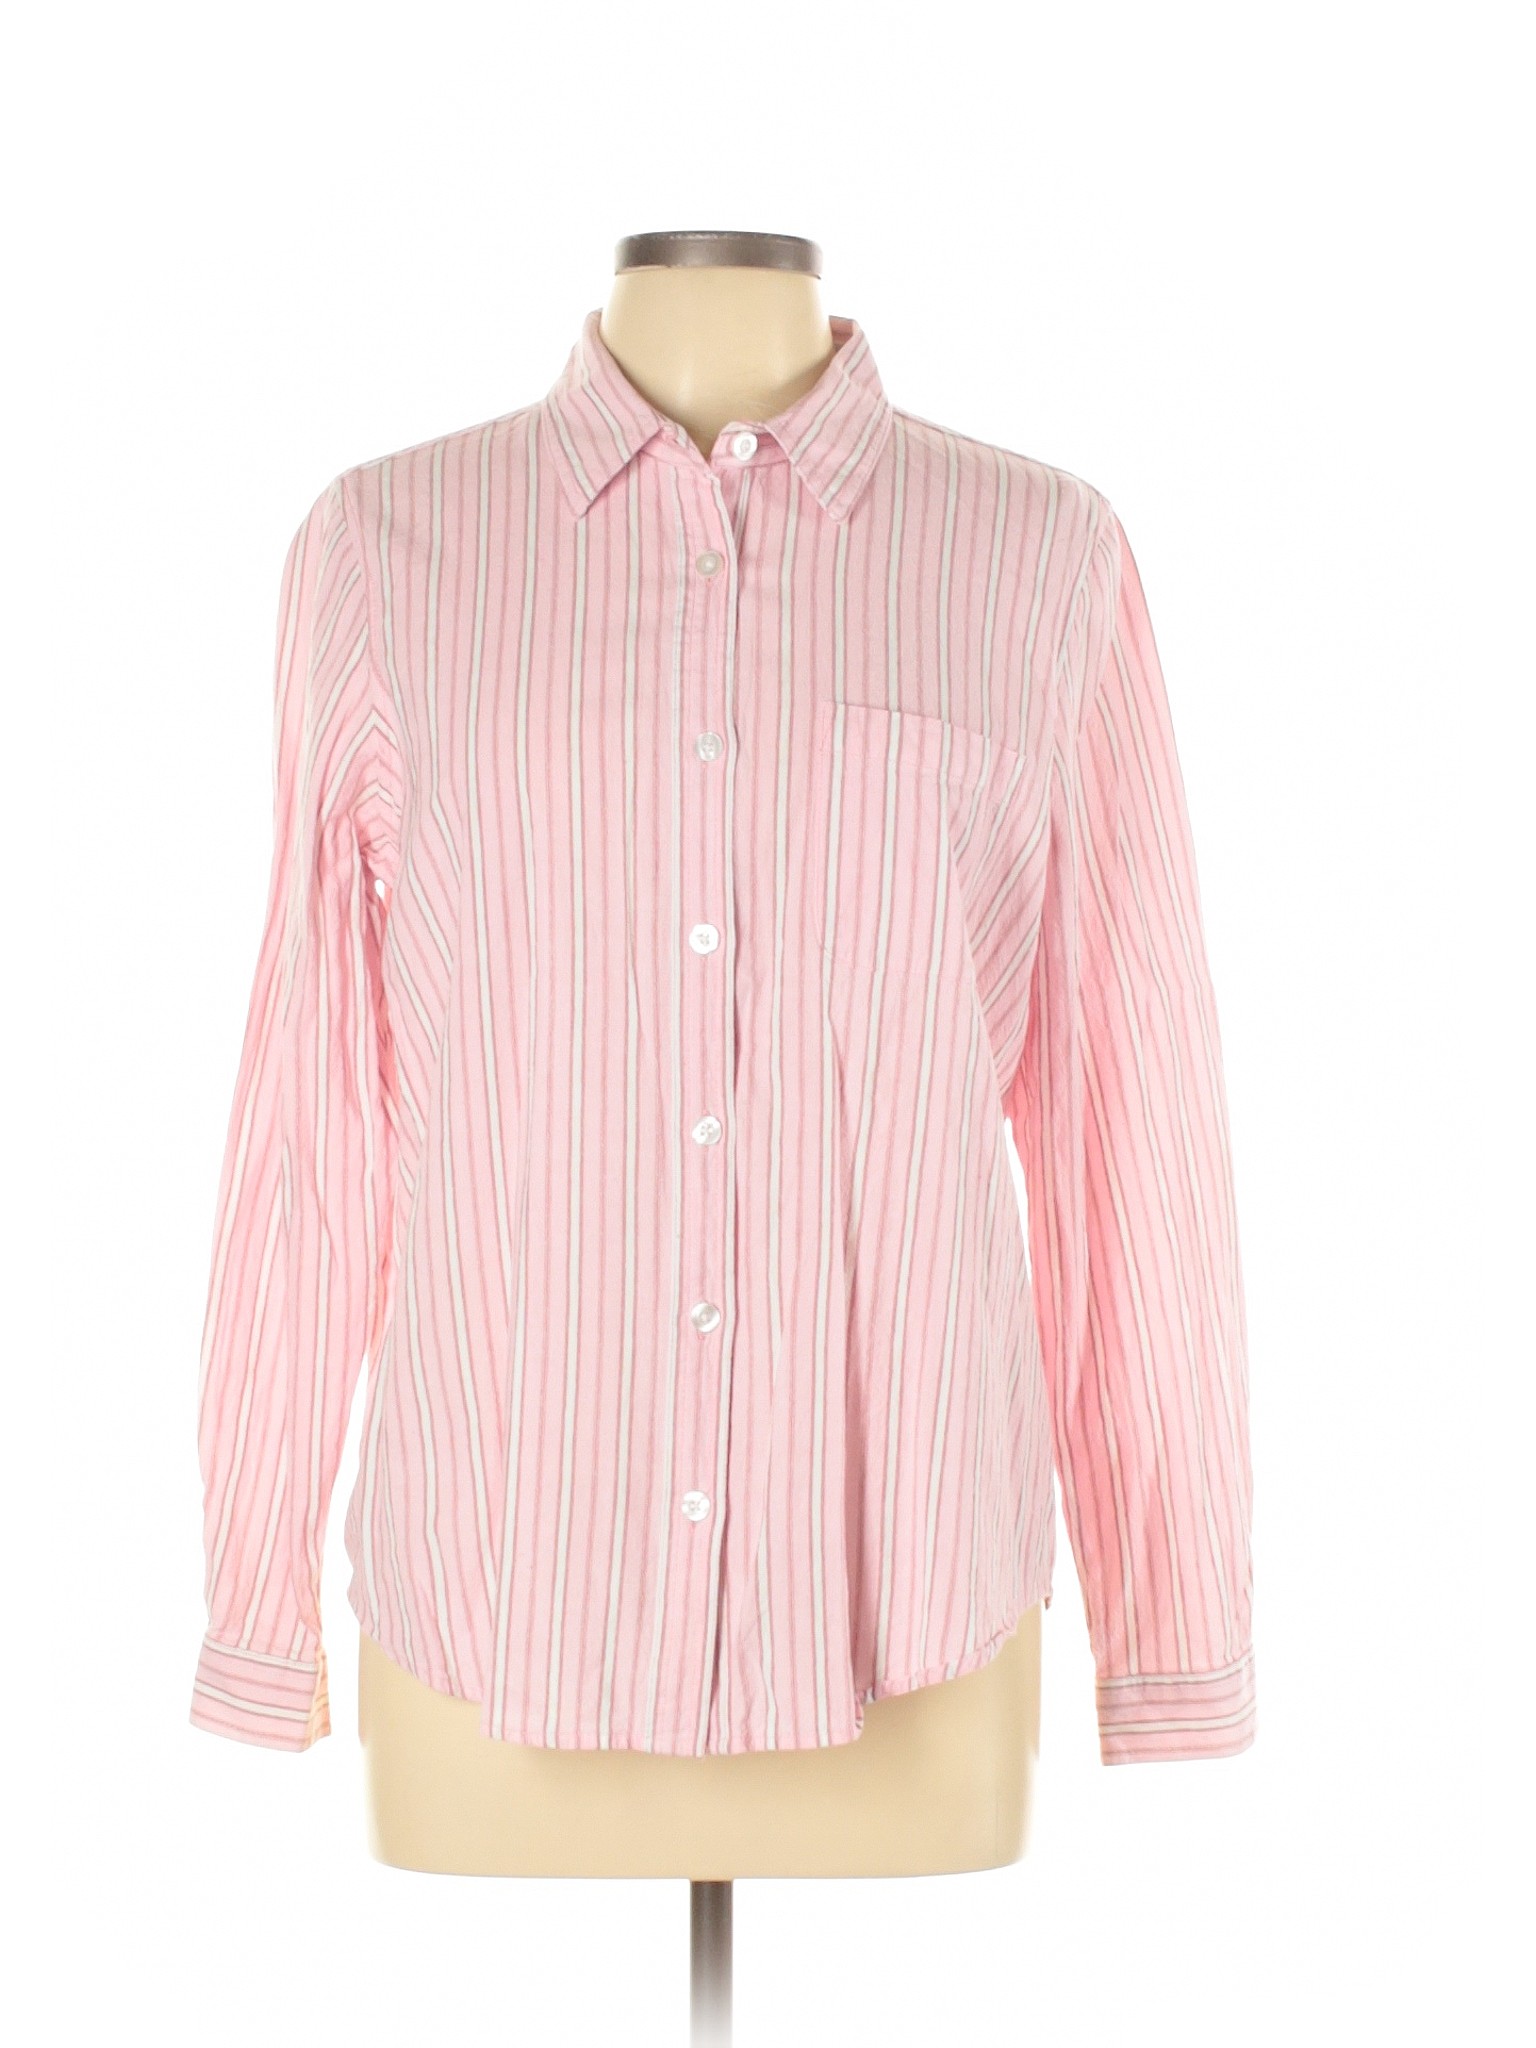 Blair Women Pink Long Sleeve Button-Down Shirt L | eBay